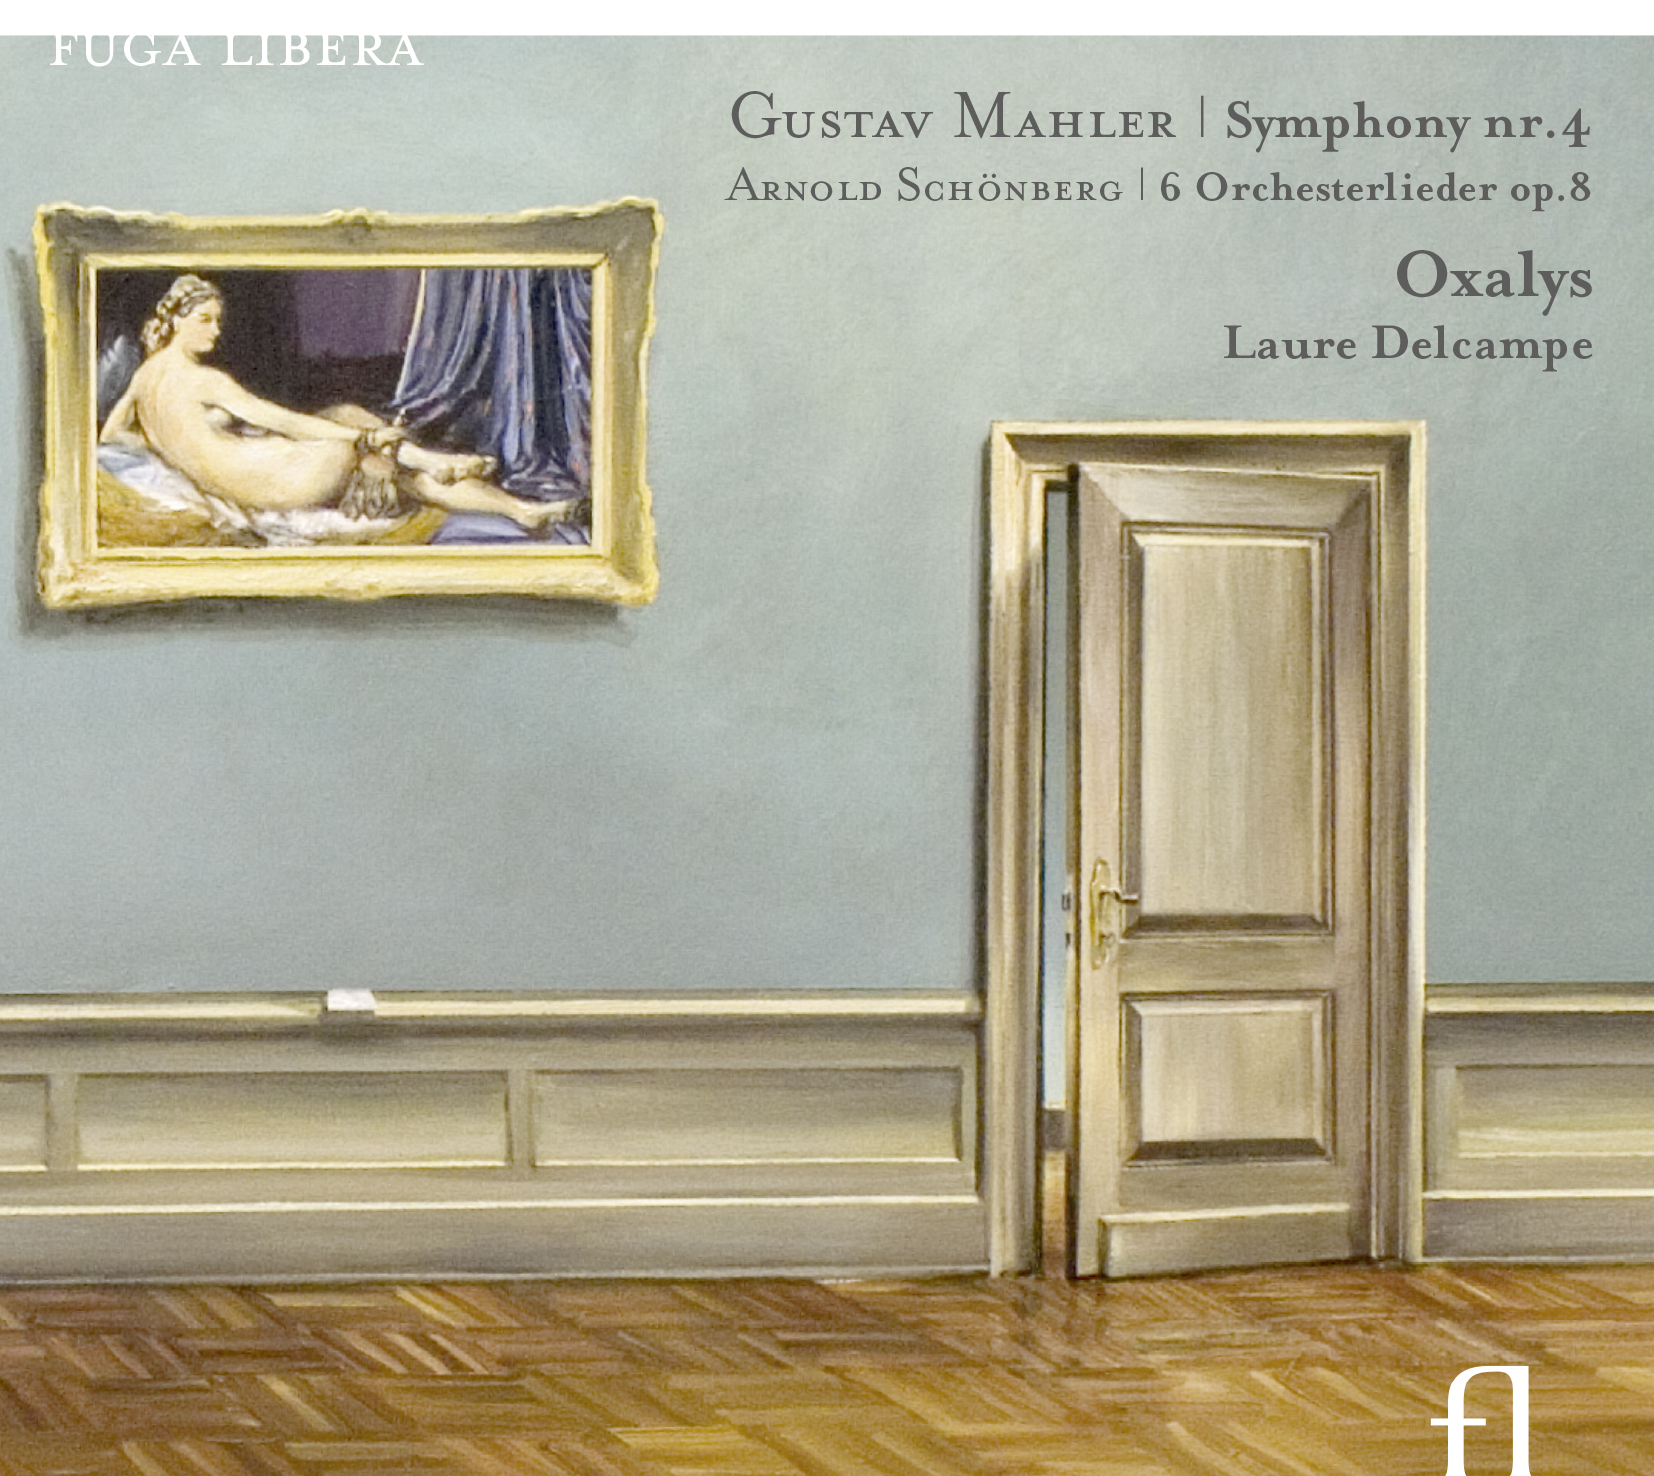 Symphony no. 4 - Gustav Mahler - Schönberg - Oxalys